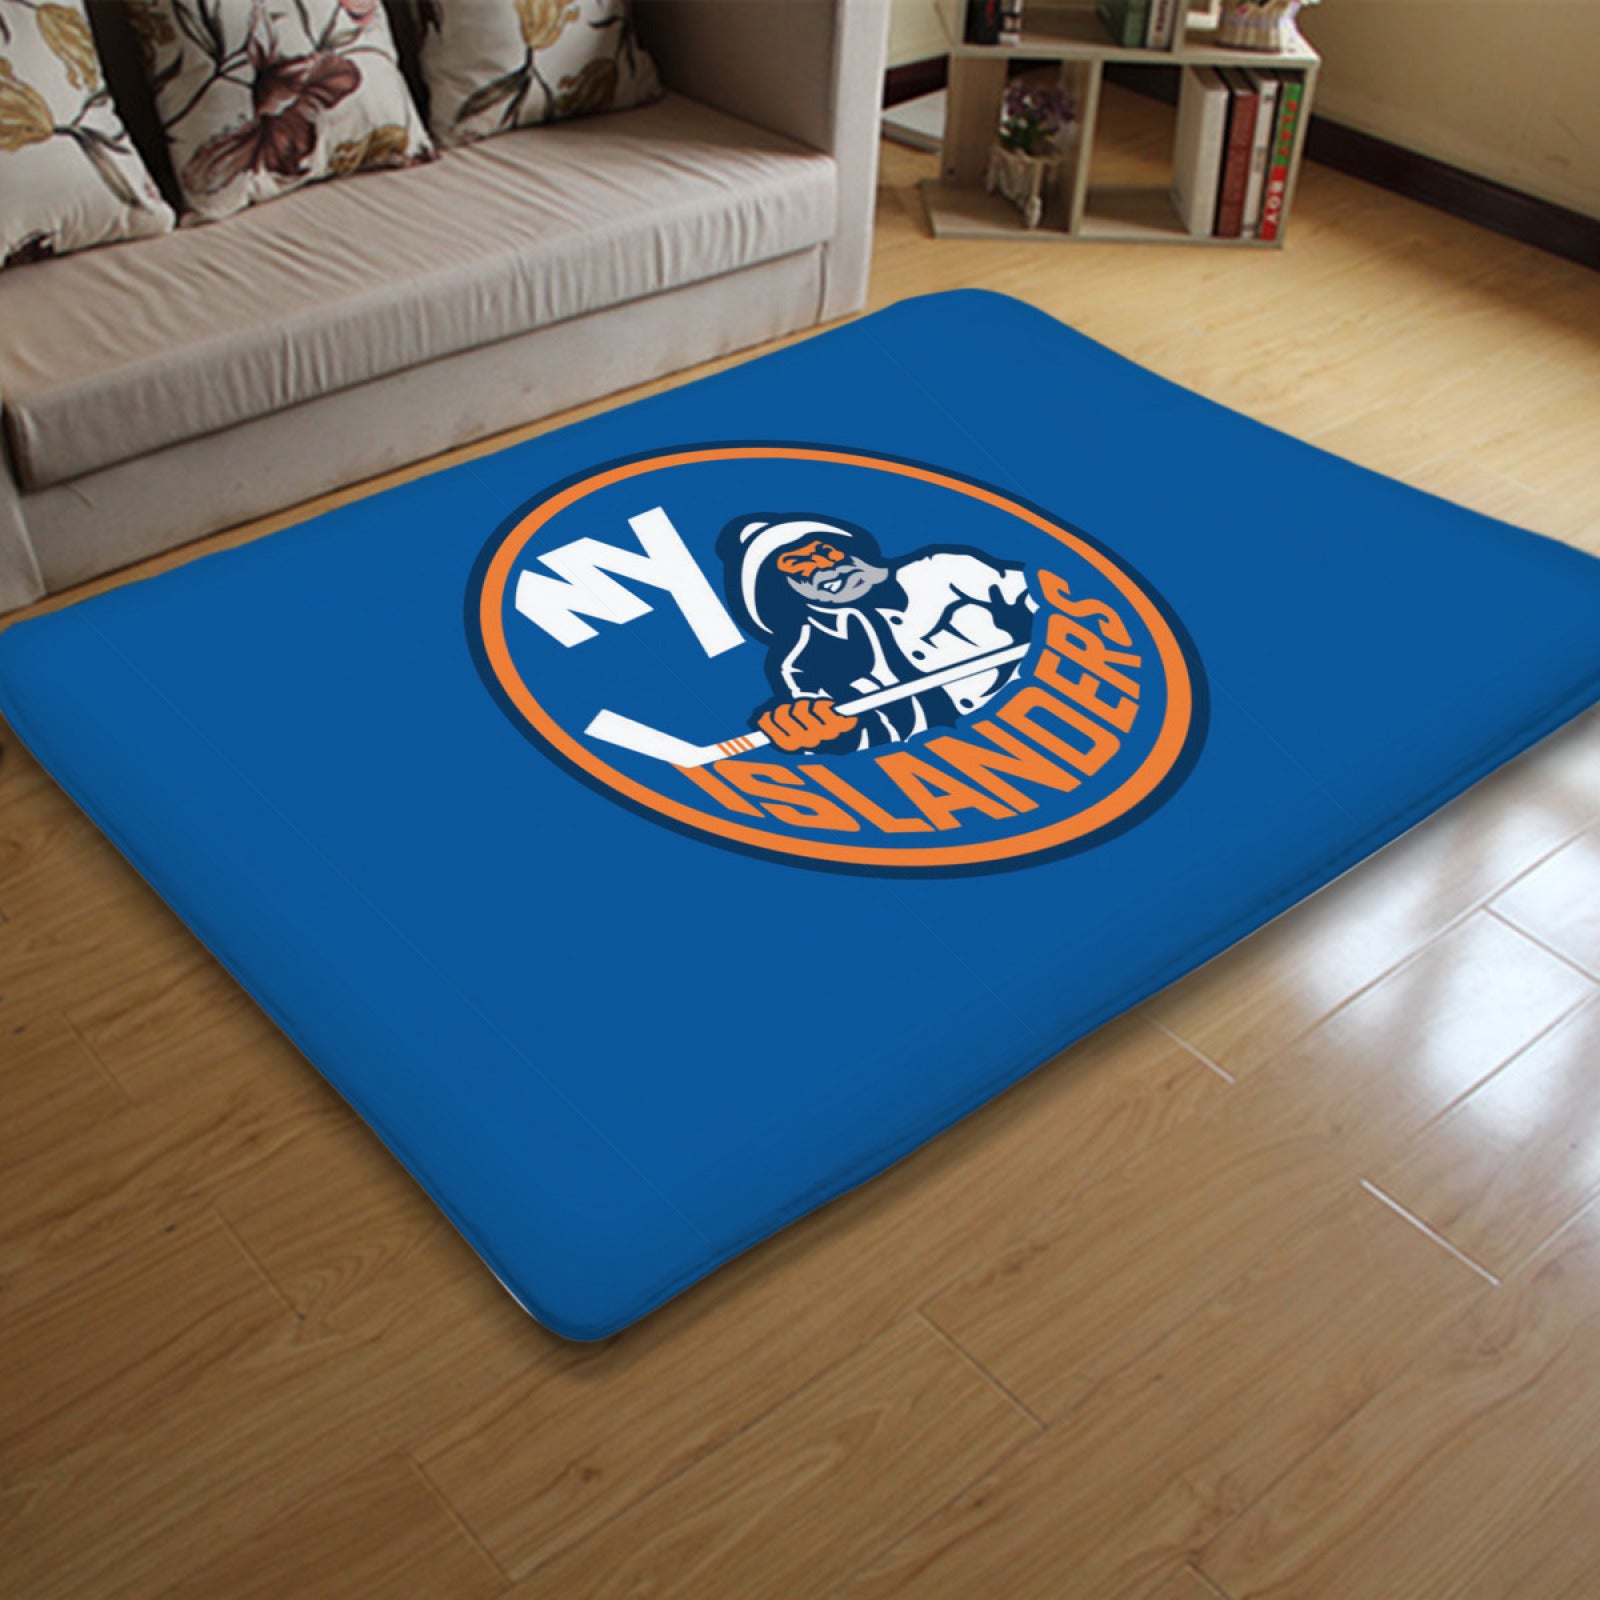 New YorkIslanders Hockey League Carpet Living Room Bedroom Mats Kitchen Bathroom Rugs